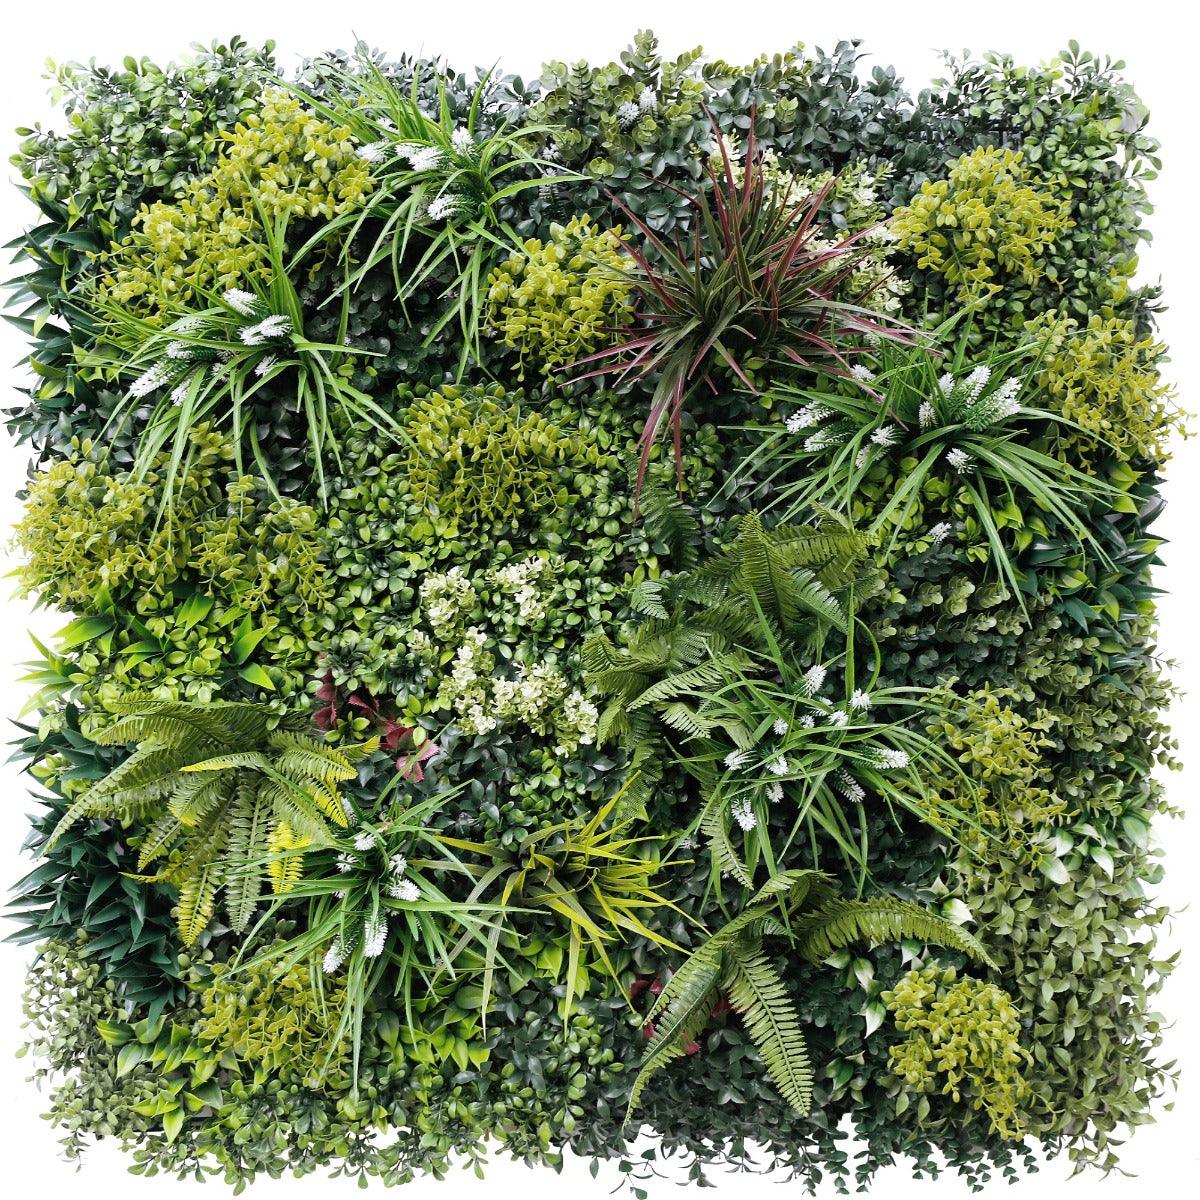 Lush Spring Vertical Garden / Green Wall UV Resistant 100cm x 100cm